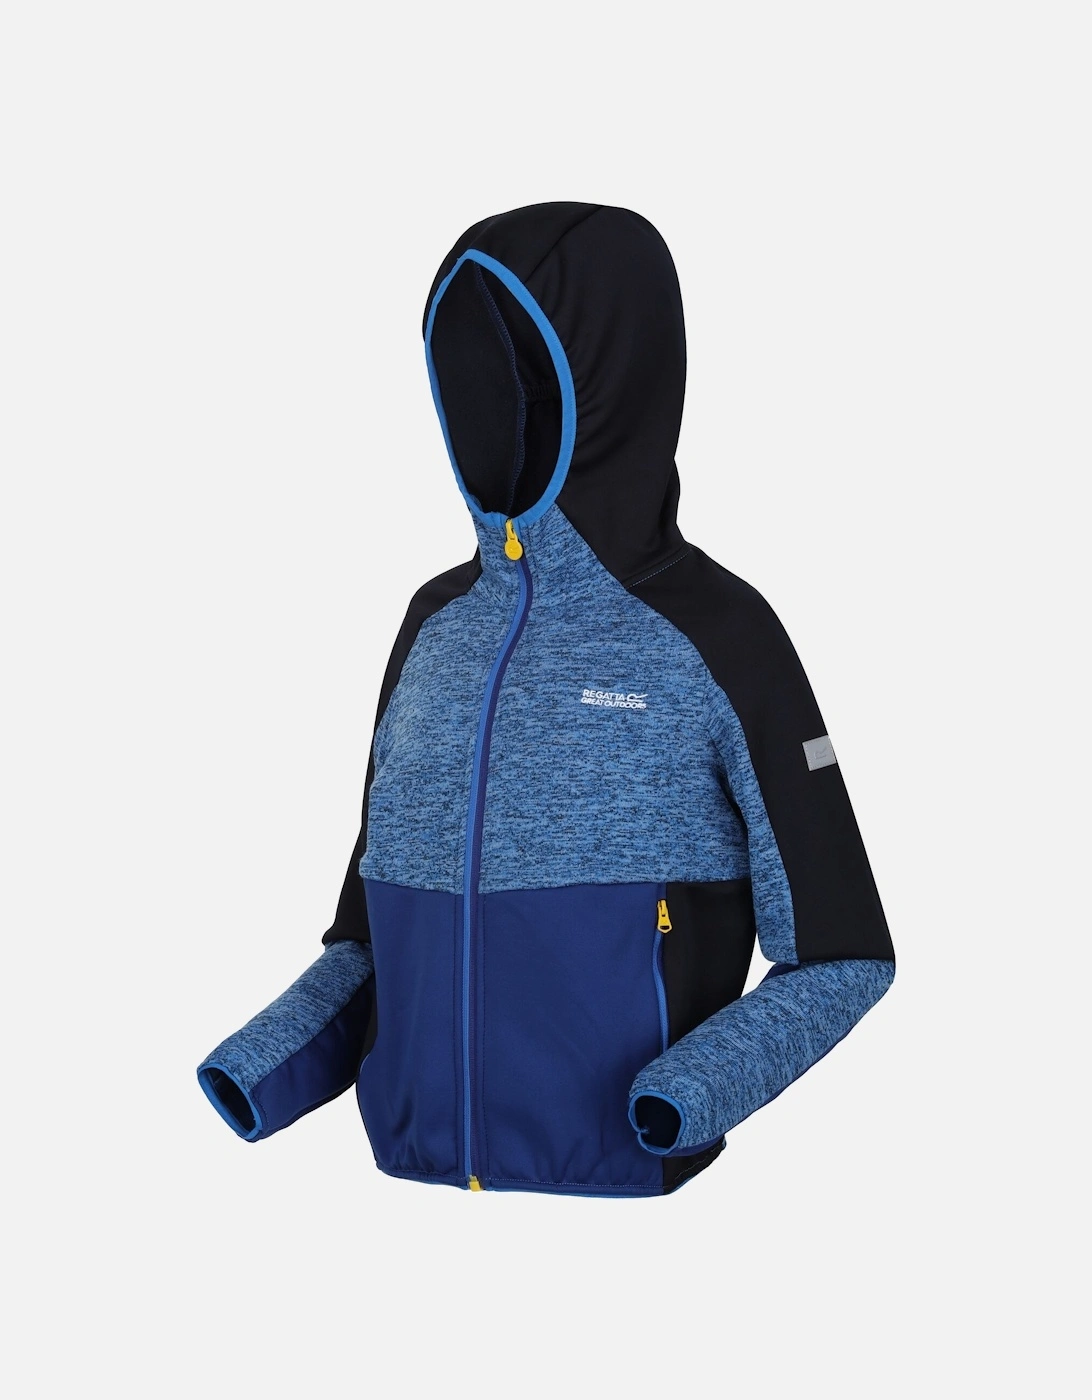 Childrens/Kids Dissolver VII Full Zip Fleece Jacket